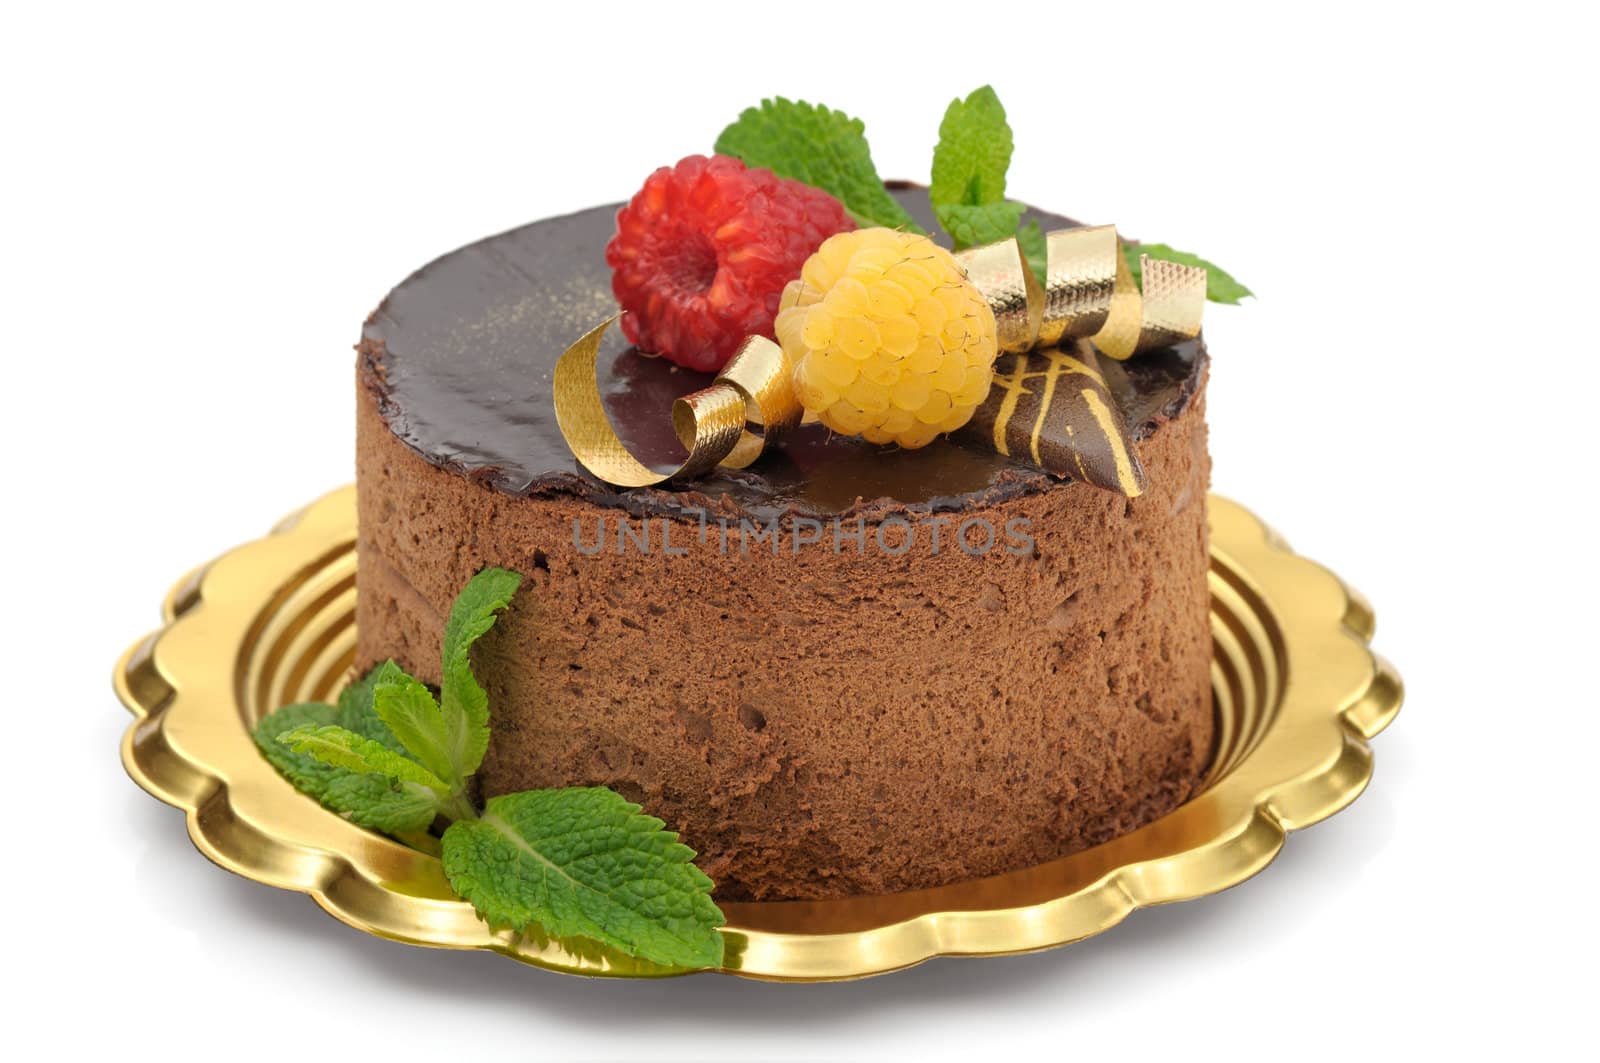 Chocolate cake by Hbak